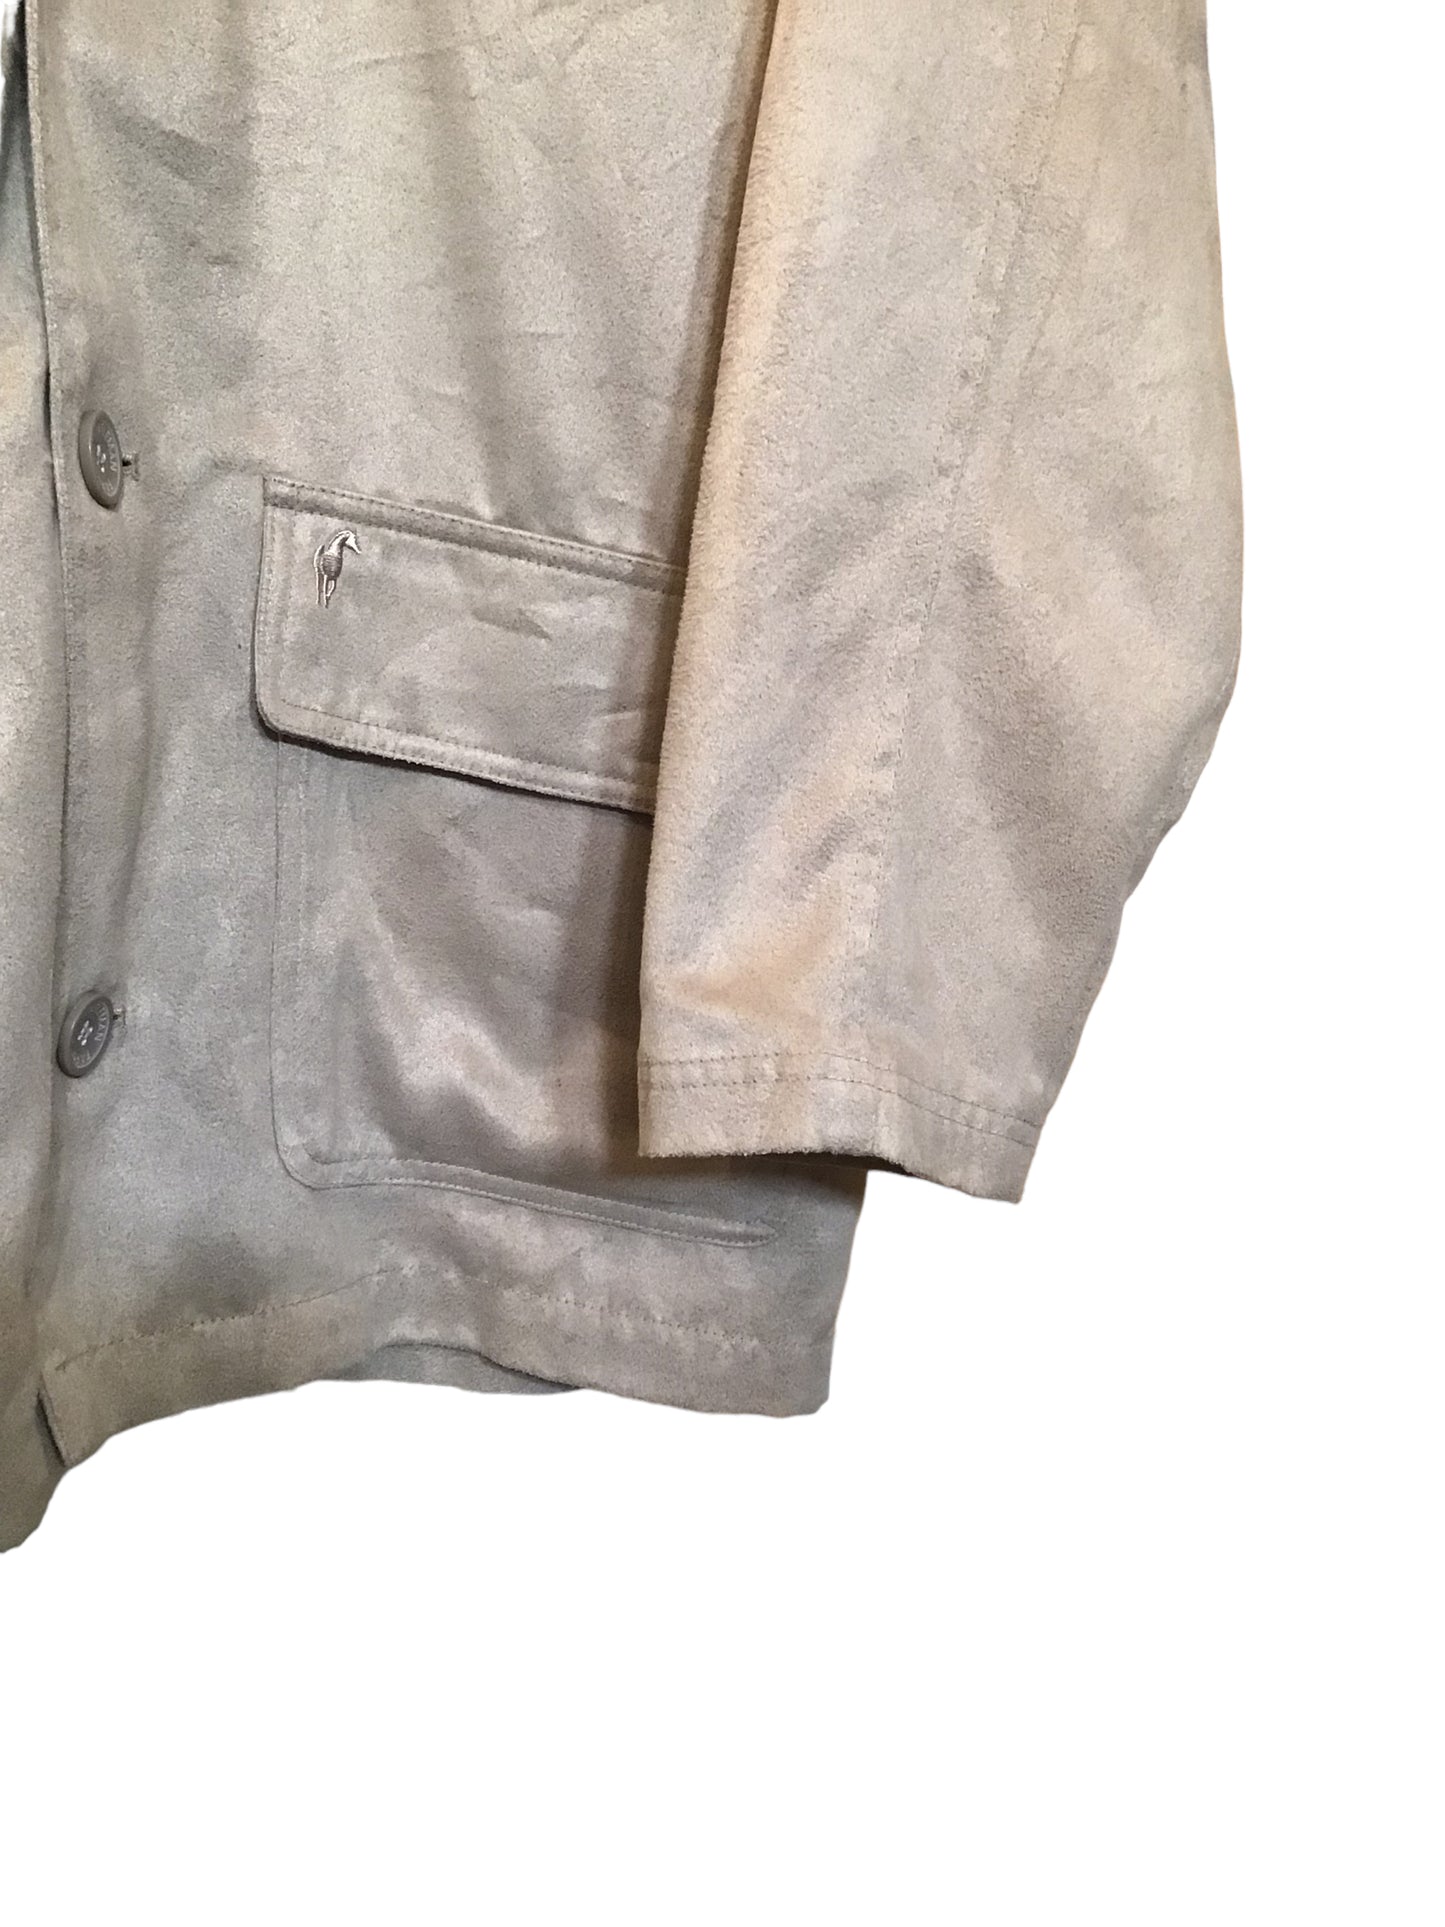 Gentleman Farmer Jacket (Size XL)